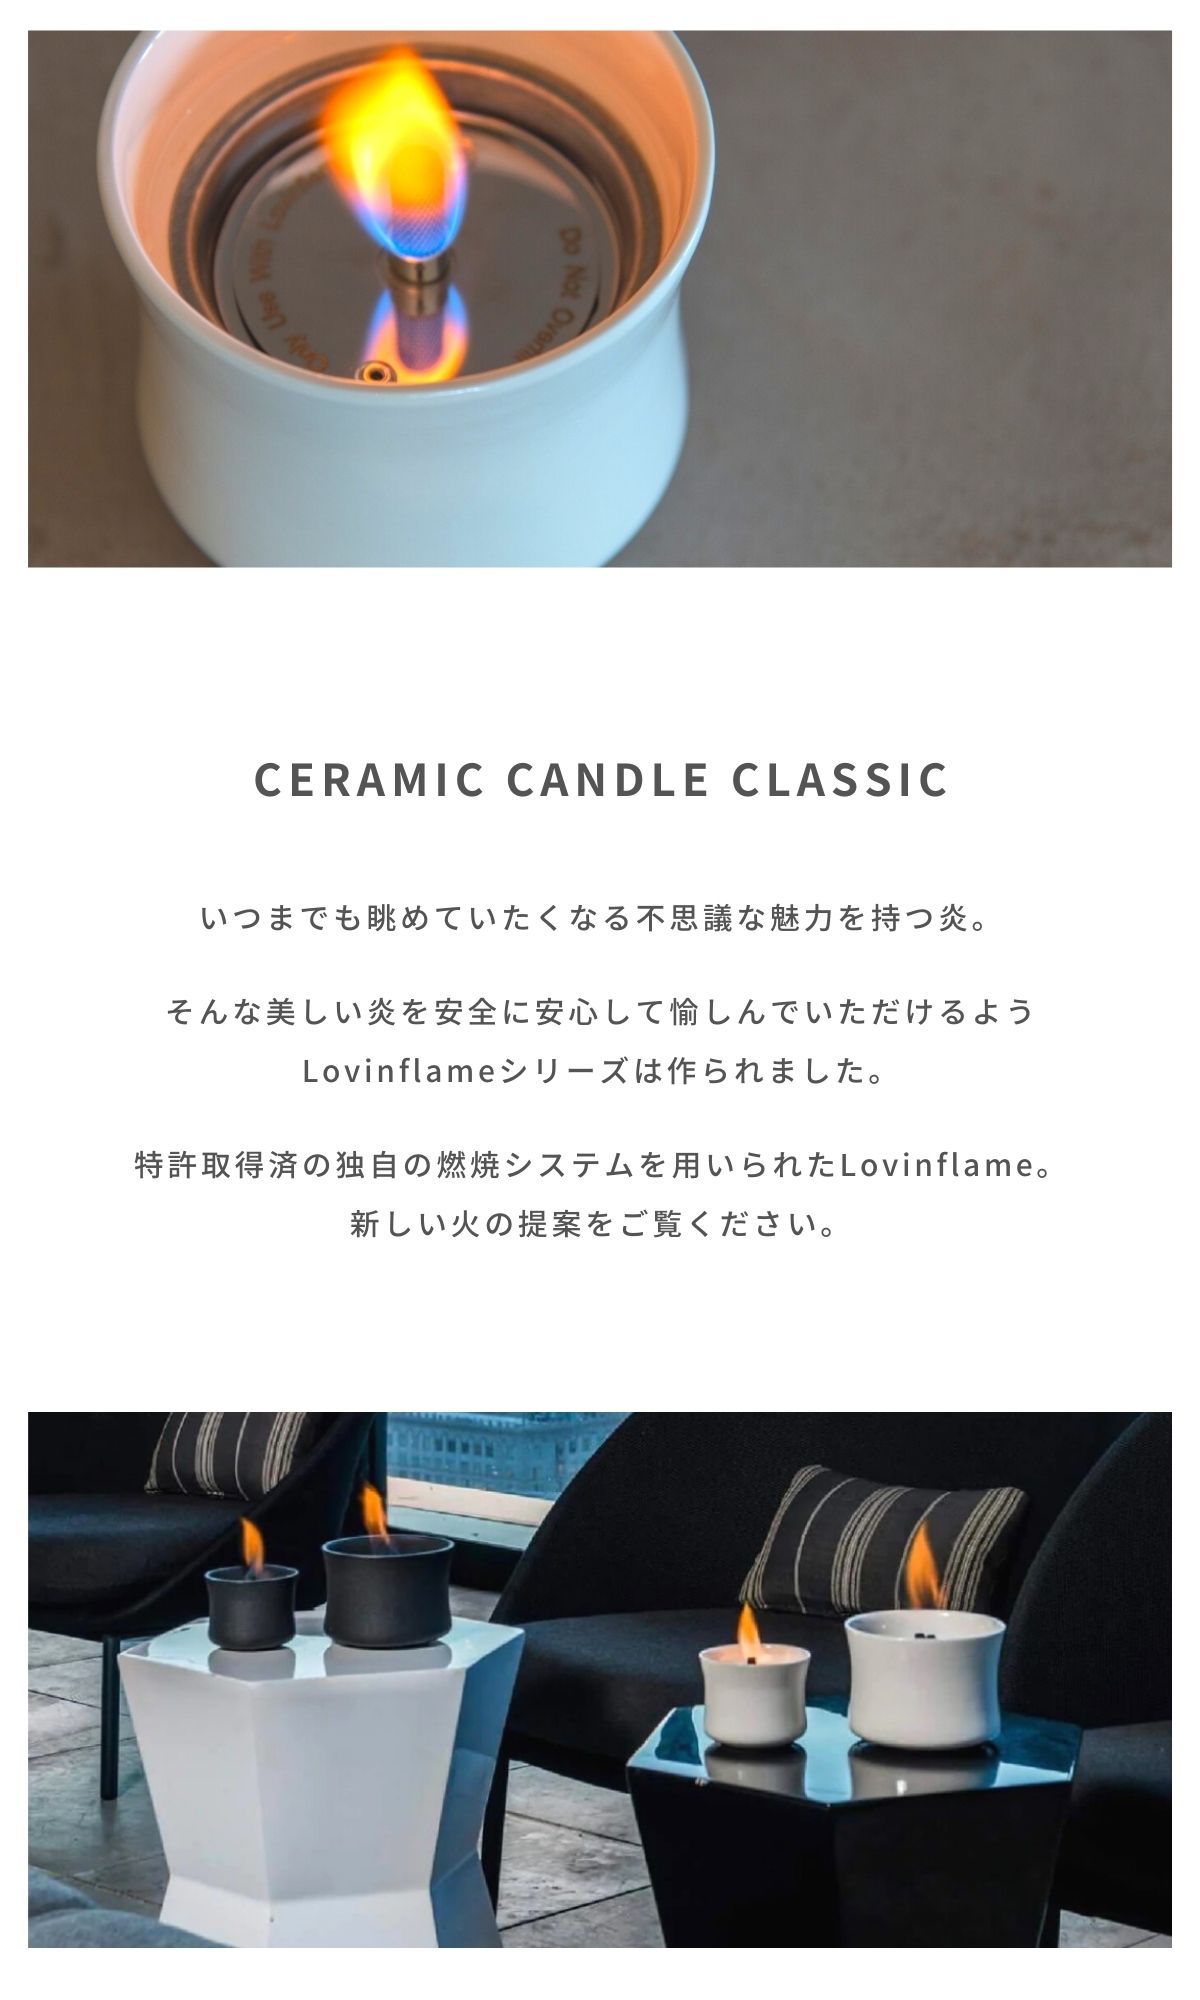 【Lovinflame セラミックキャンドルクラシック 専用燃料セット】の商品情報詳細